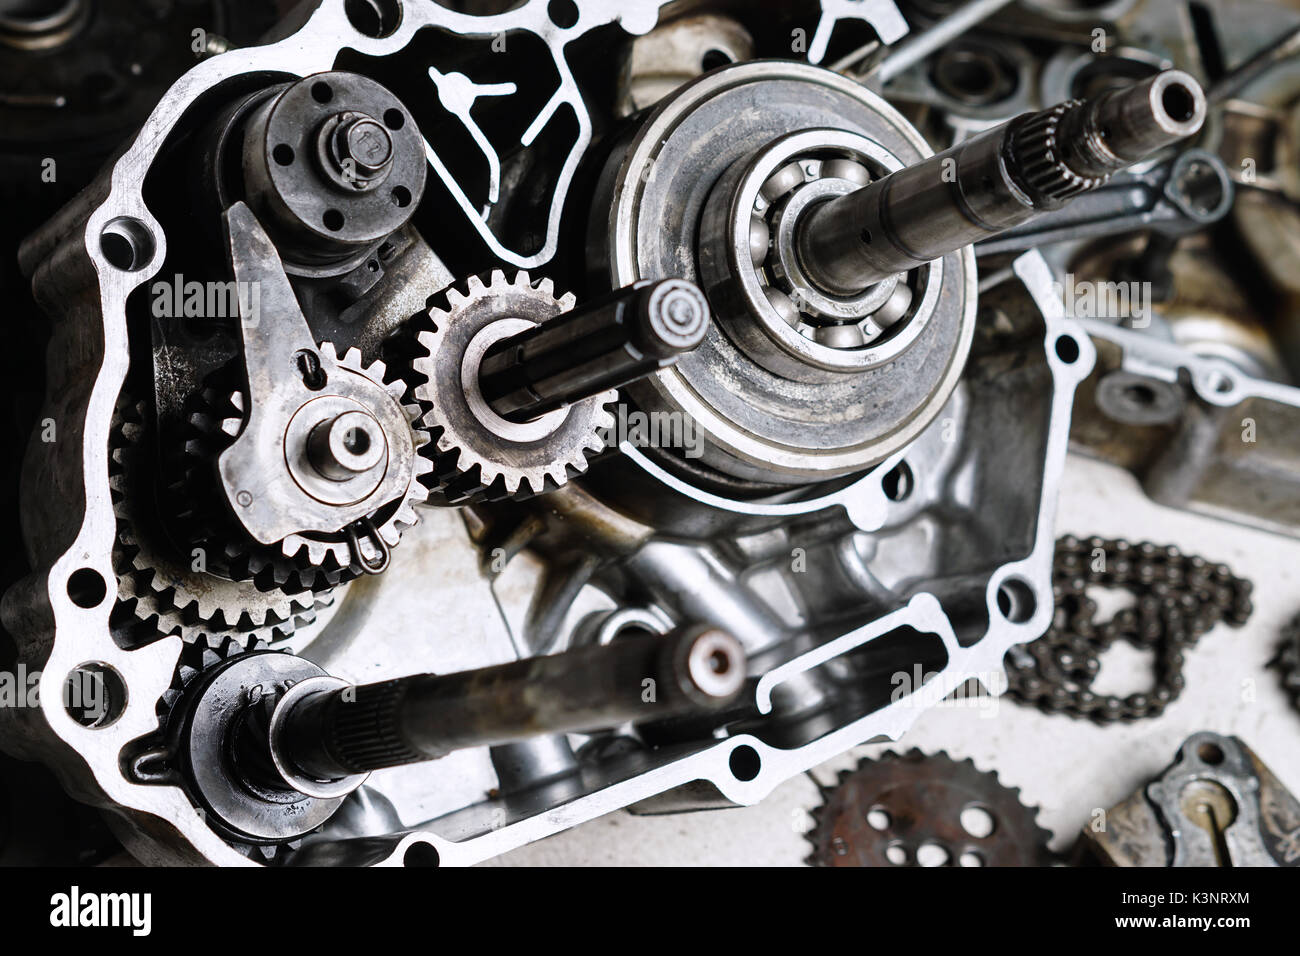 Motorcycle engine's gears Stock Photo - Alamy